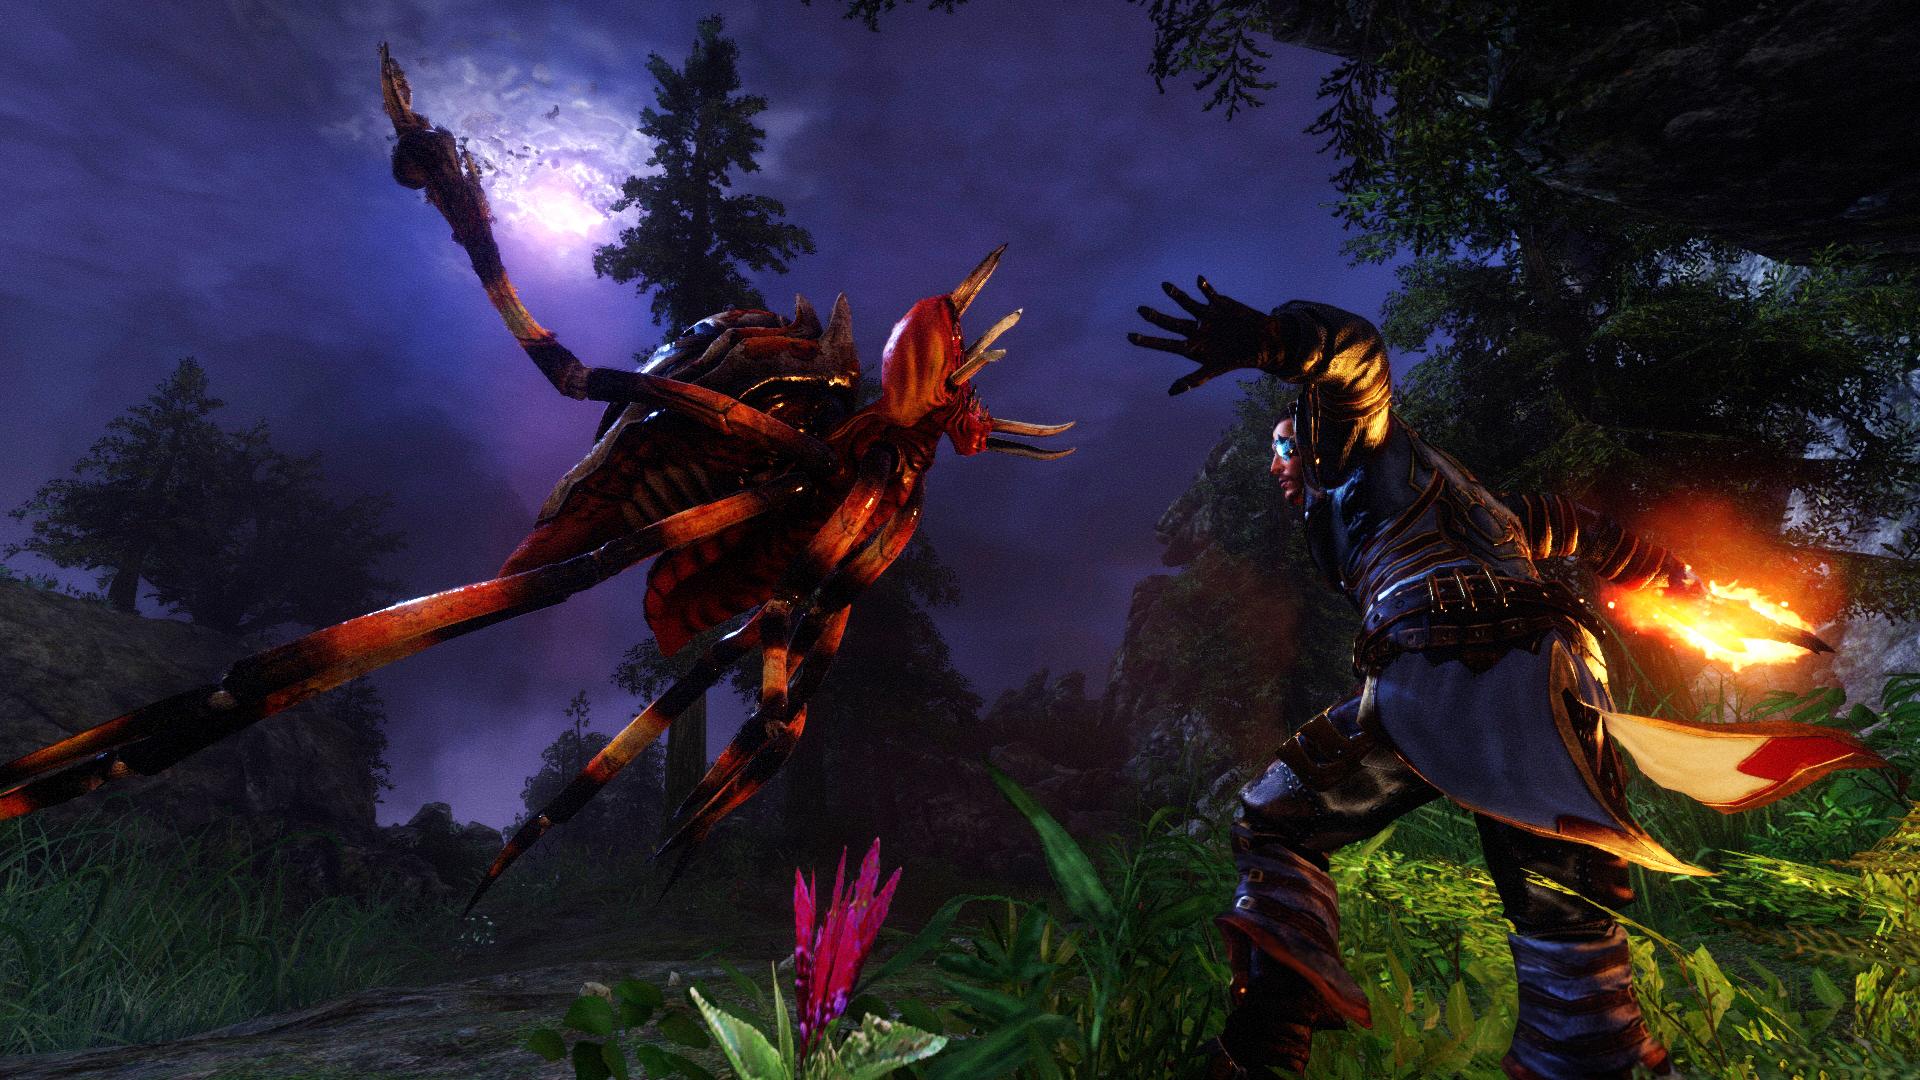 Screenshot №17 from game Risen 3 - Titan Lords